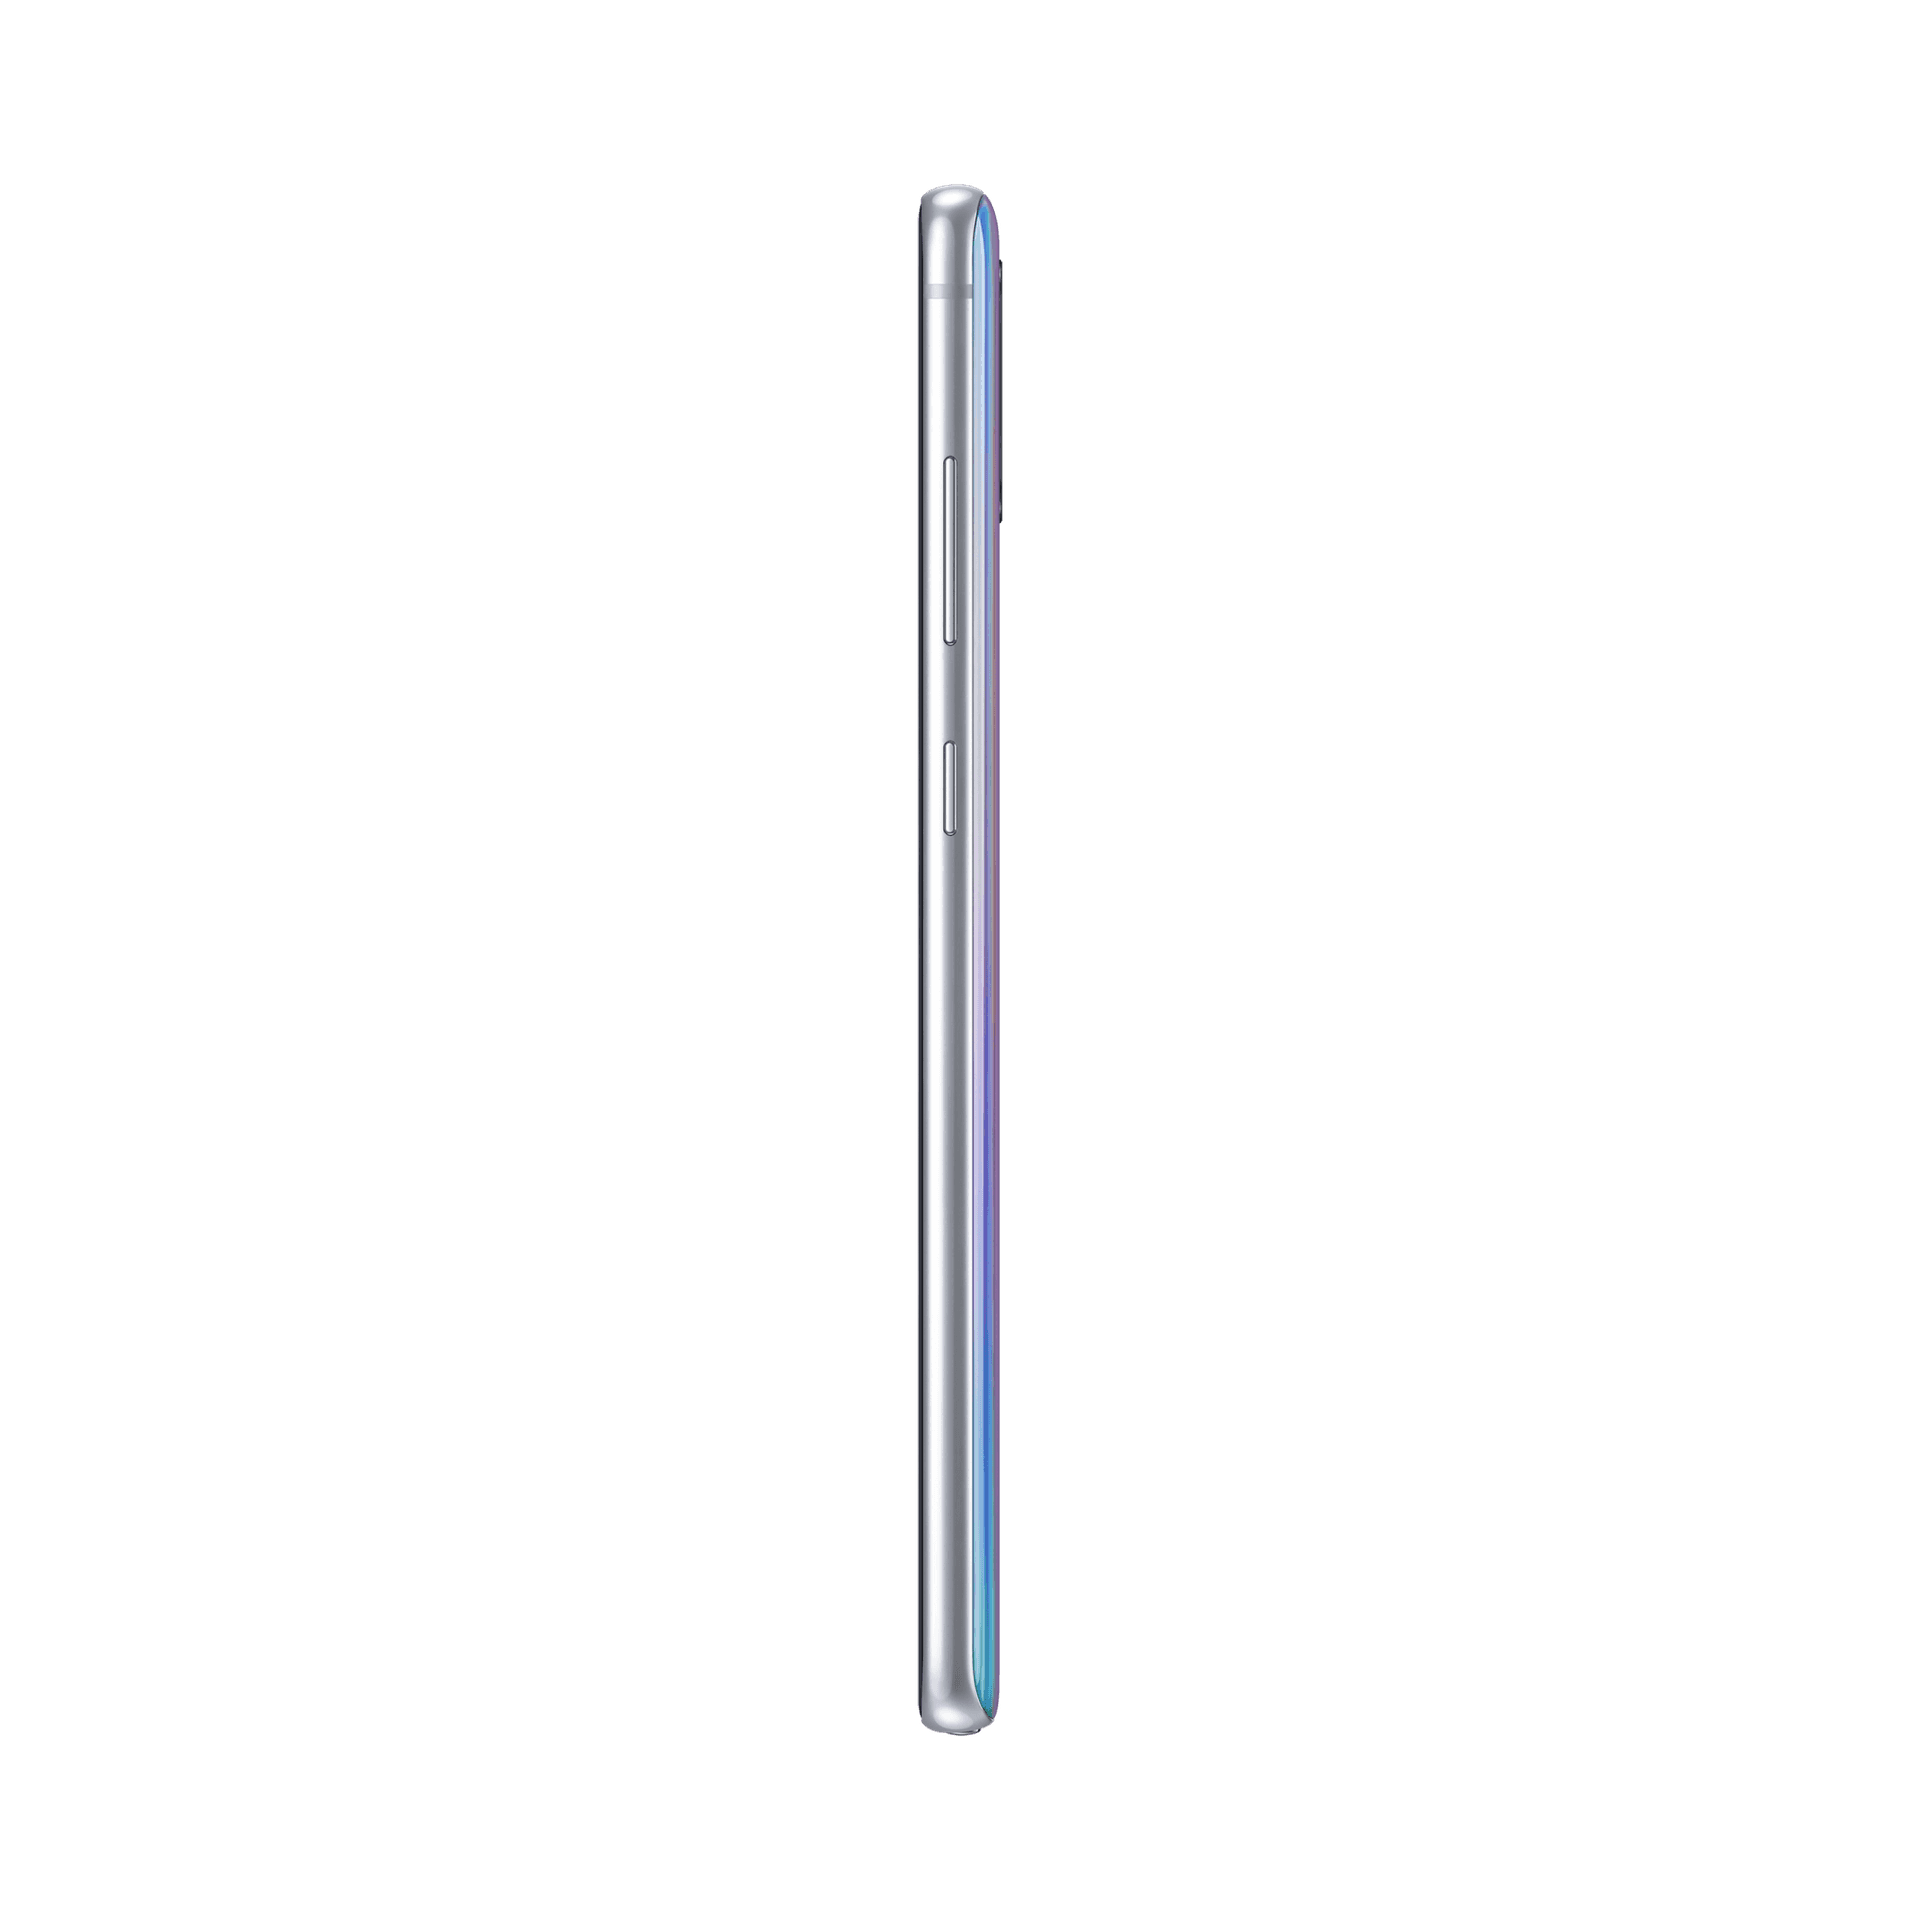 Samsung Galaxy Note 10 Lite - 128 GB - Aura Işıması